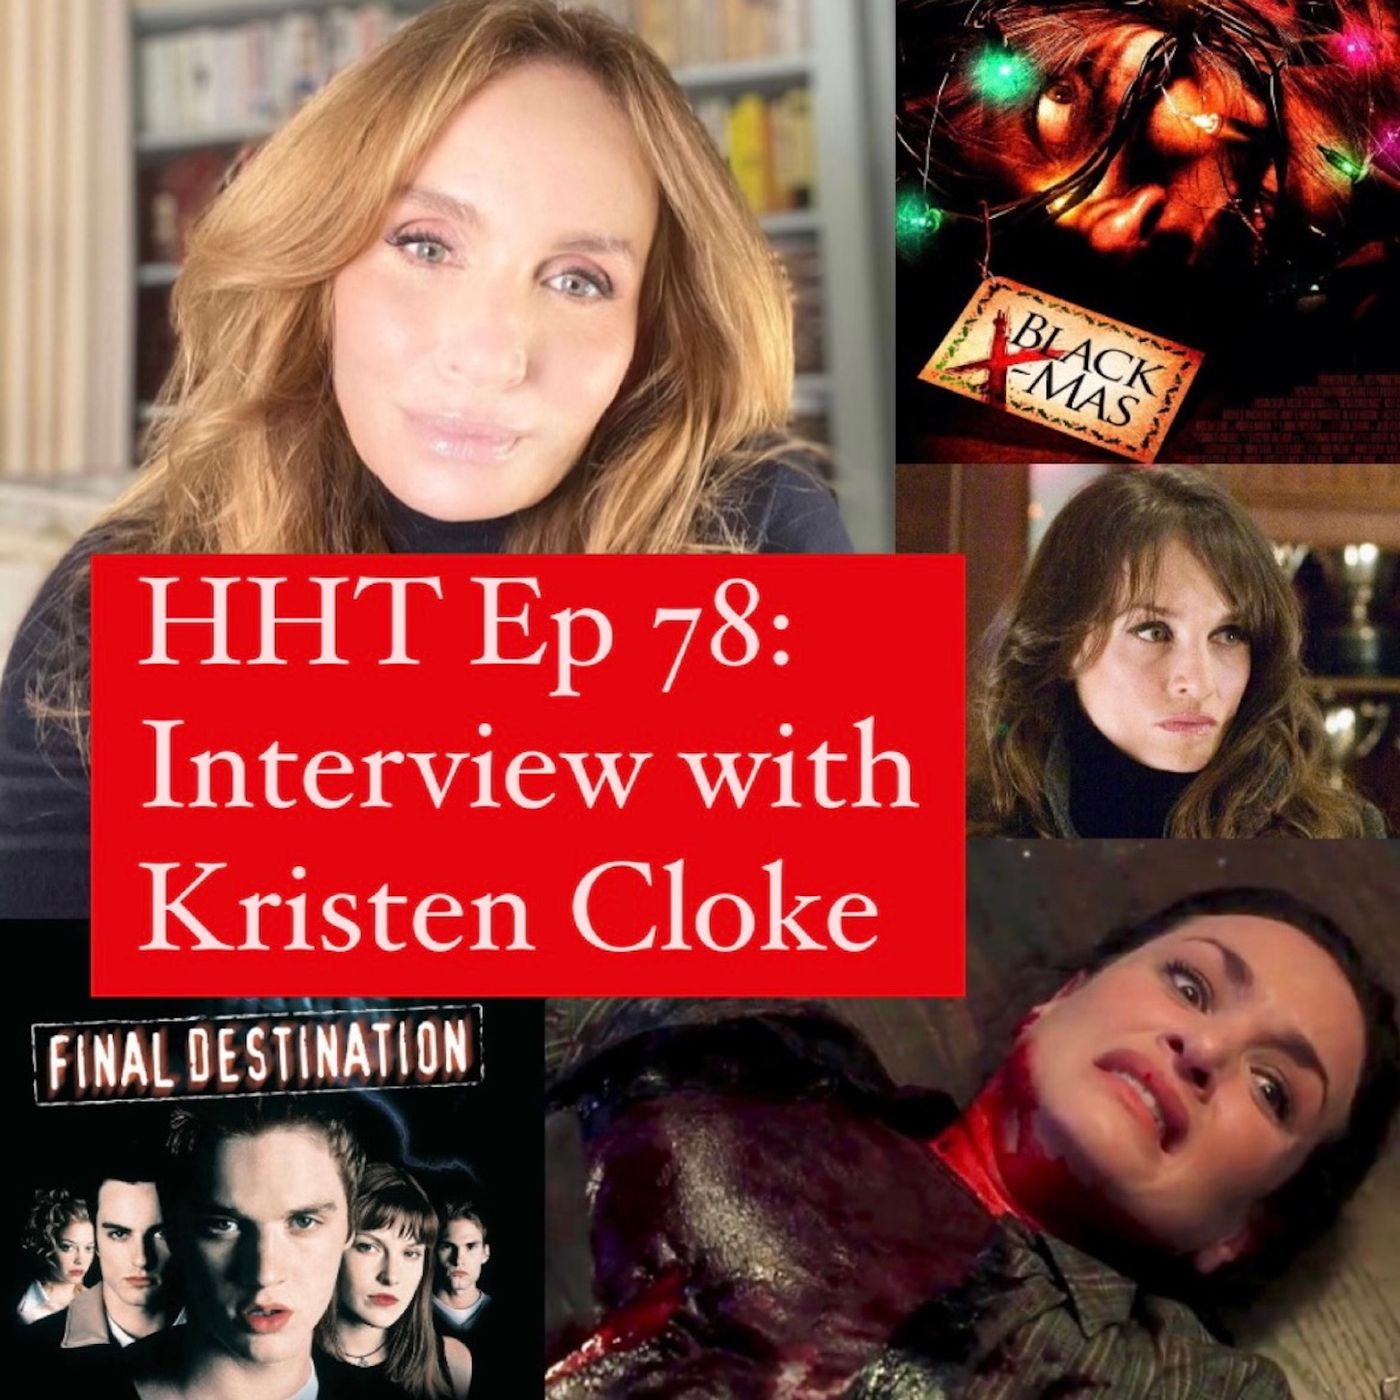 Ep 78: Interview w/Kristen Cloke from “Black Christmas” (2006) & “Final Destination” Image